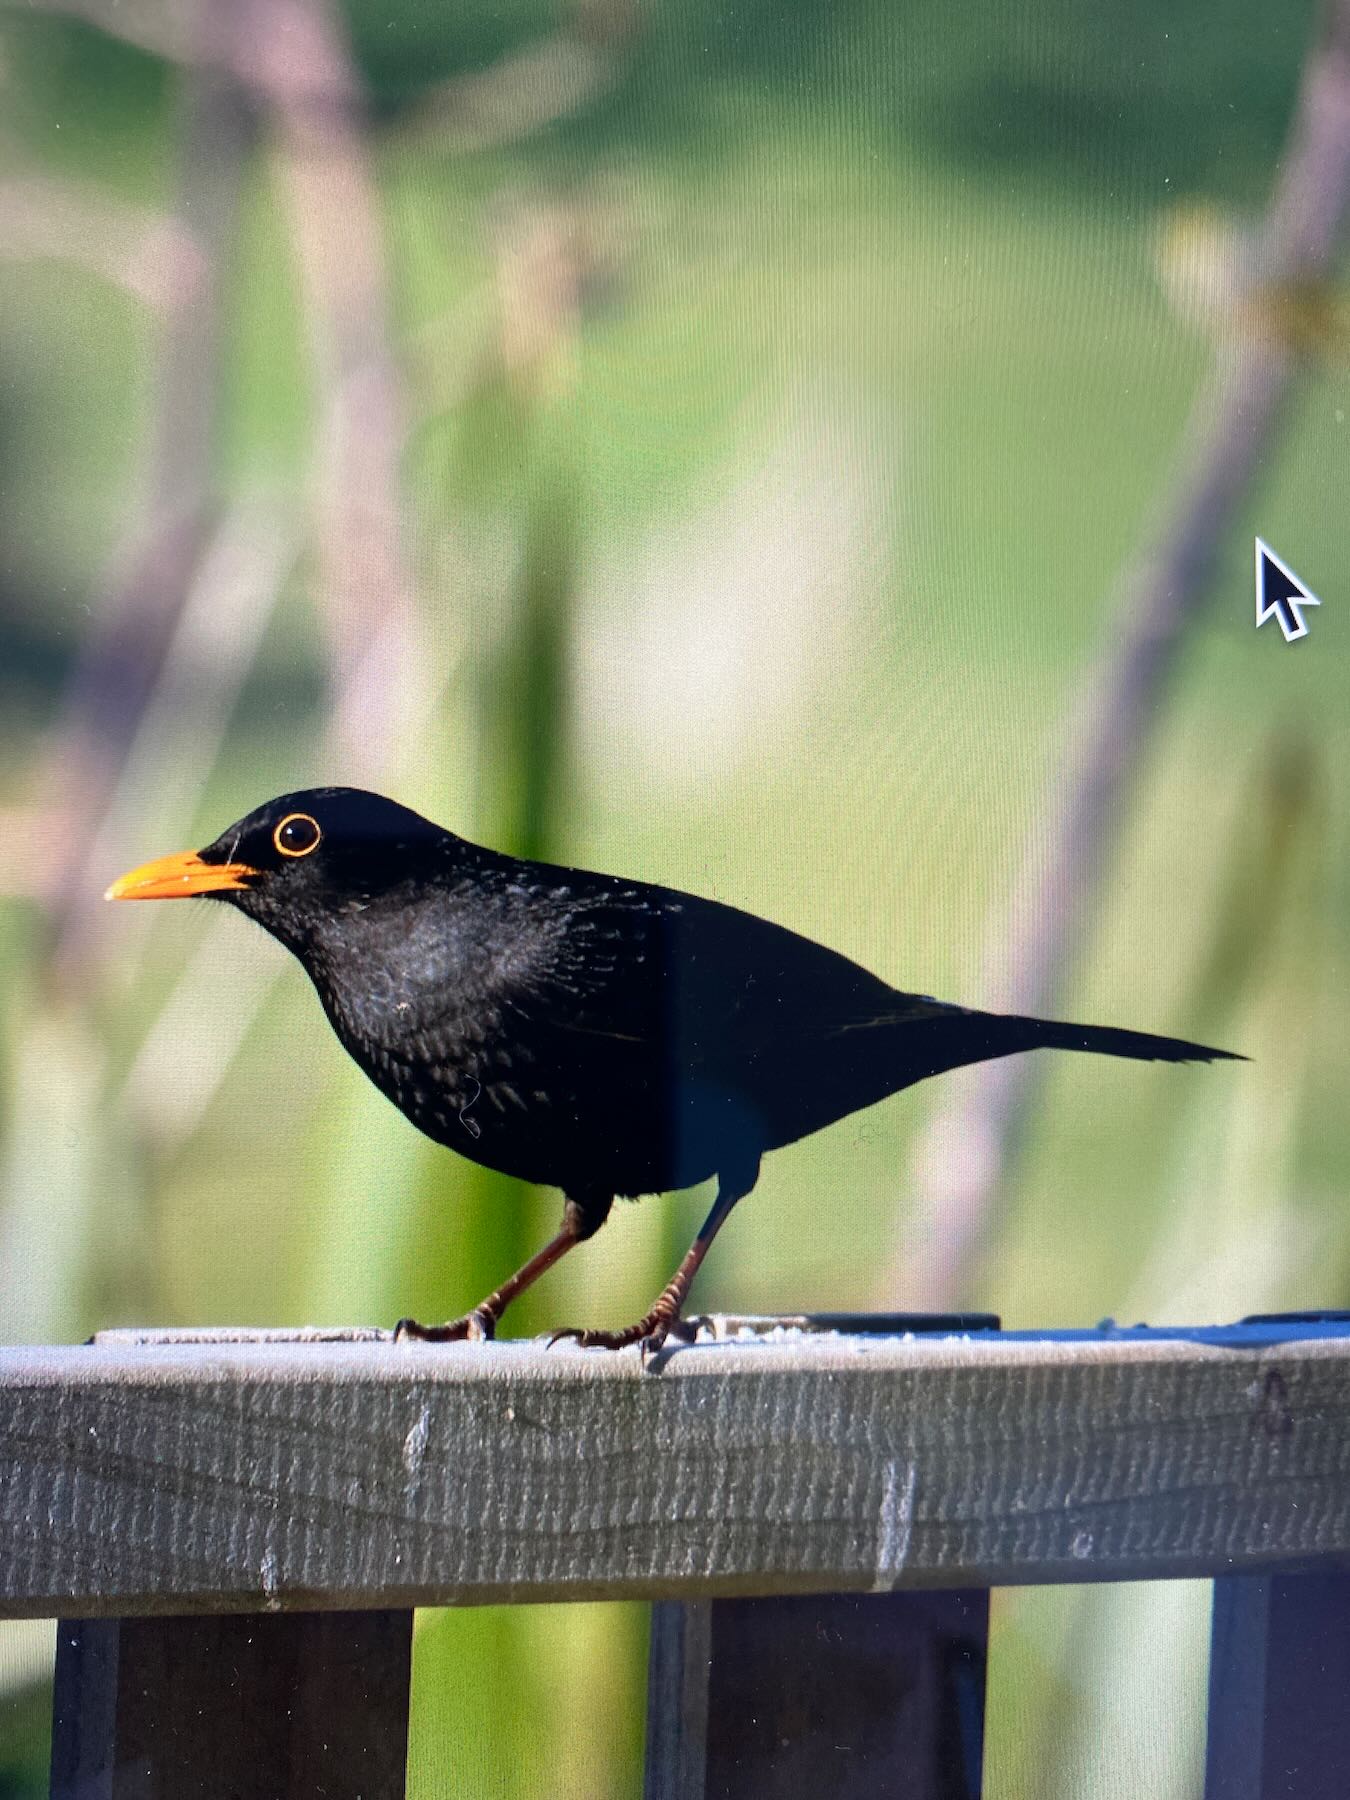 Black bird on a railing. 